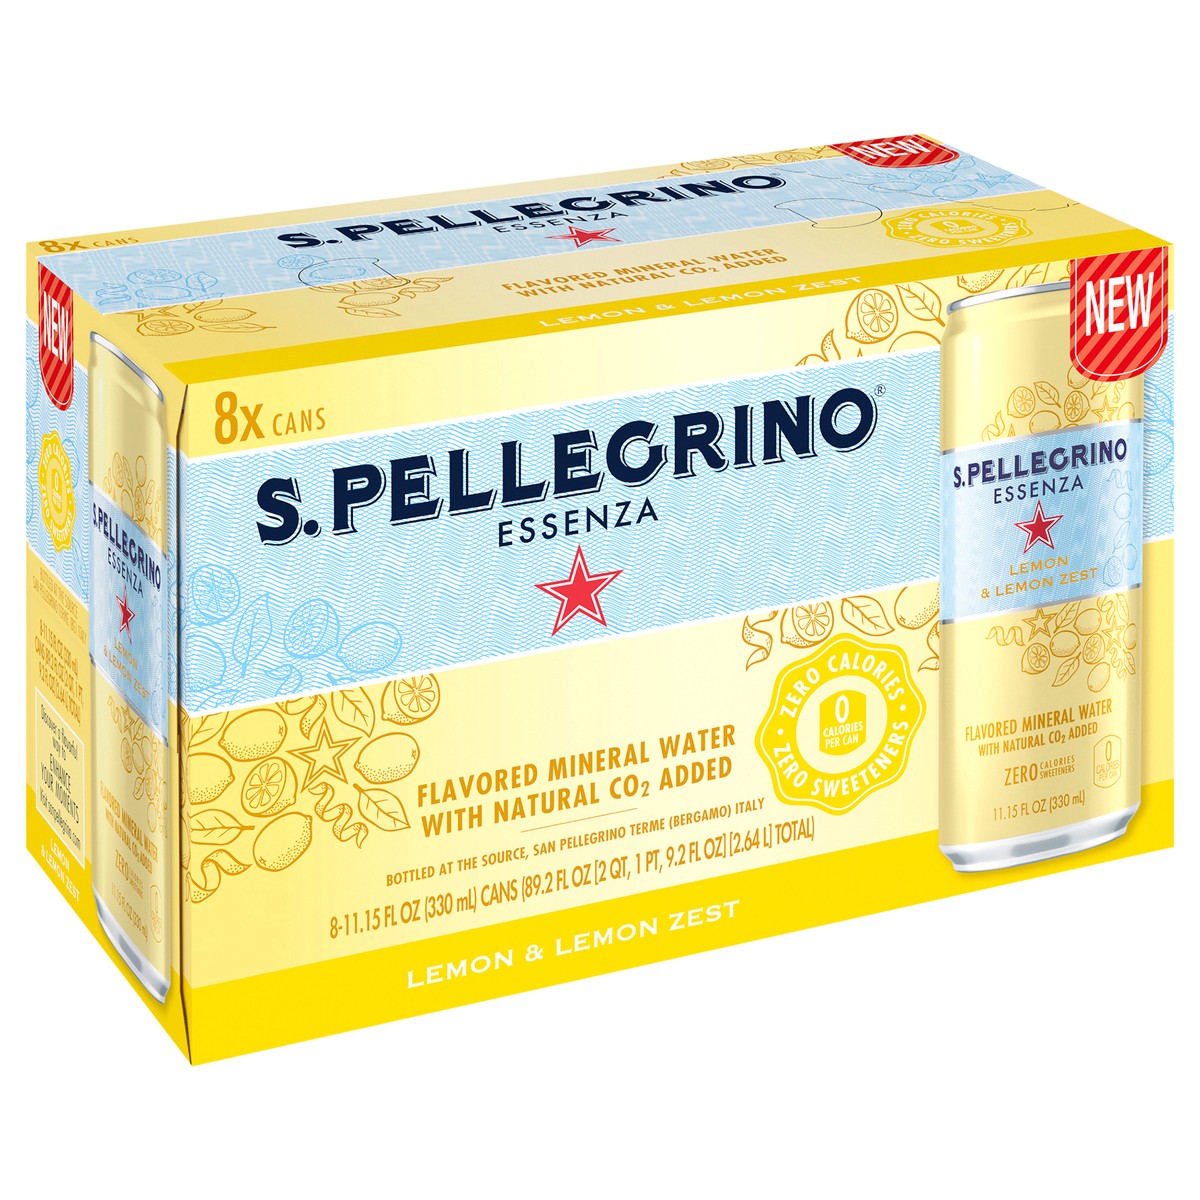 slide 7 of 7, S.Pellegrino Essenza Lemon & Lemon Zest Flavored Mineral Water with Natural CO2 Added, 8 Pack of 11.15 Fl Oz Cans, 11.15 oz